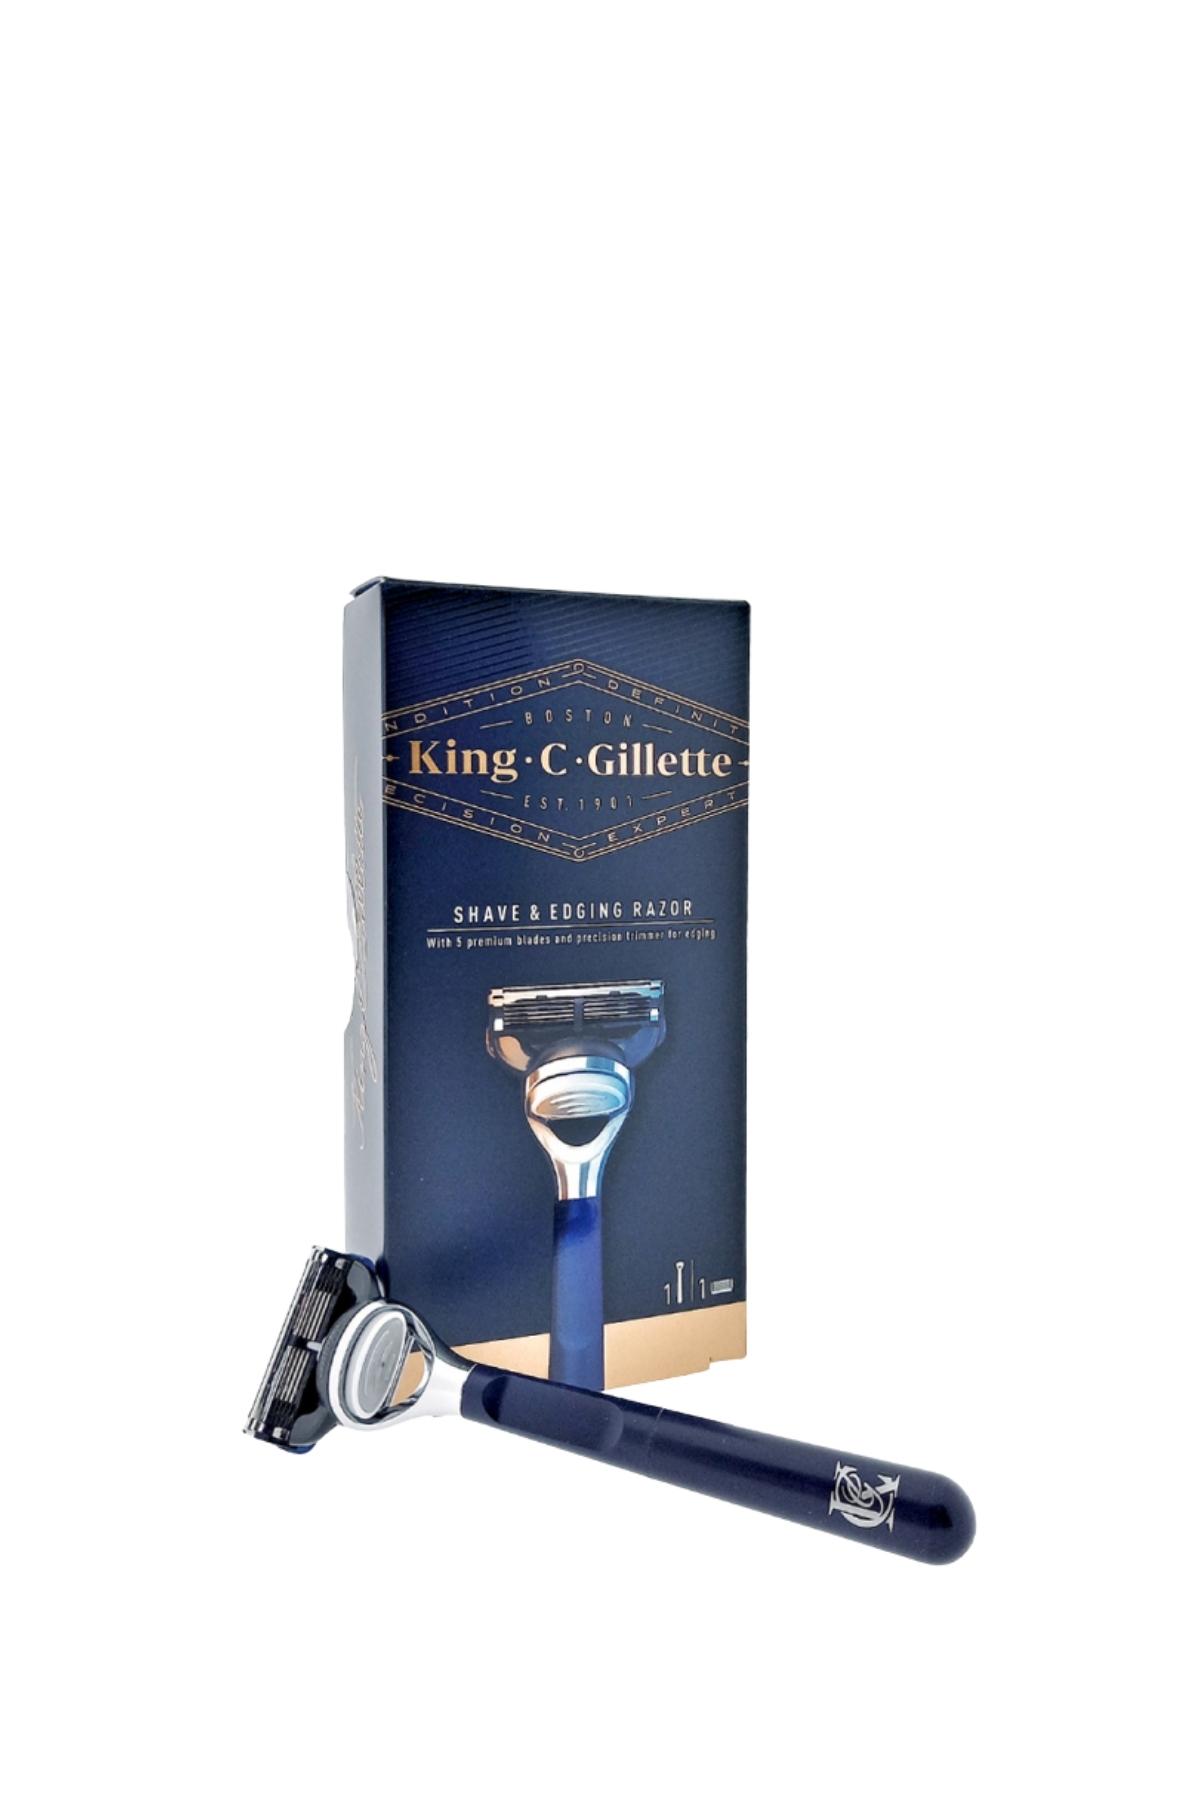 Gillette Kral C, Gillette Tıraş & Kenar Jilet Tıraş Makinesi